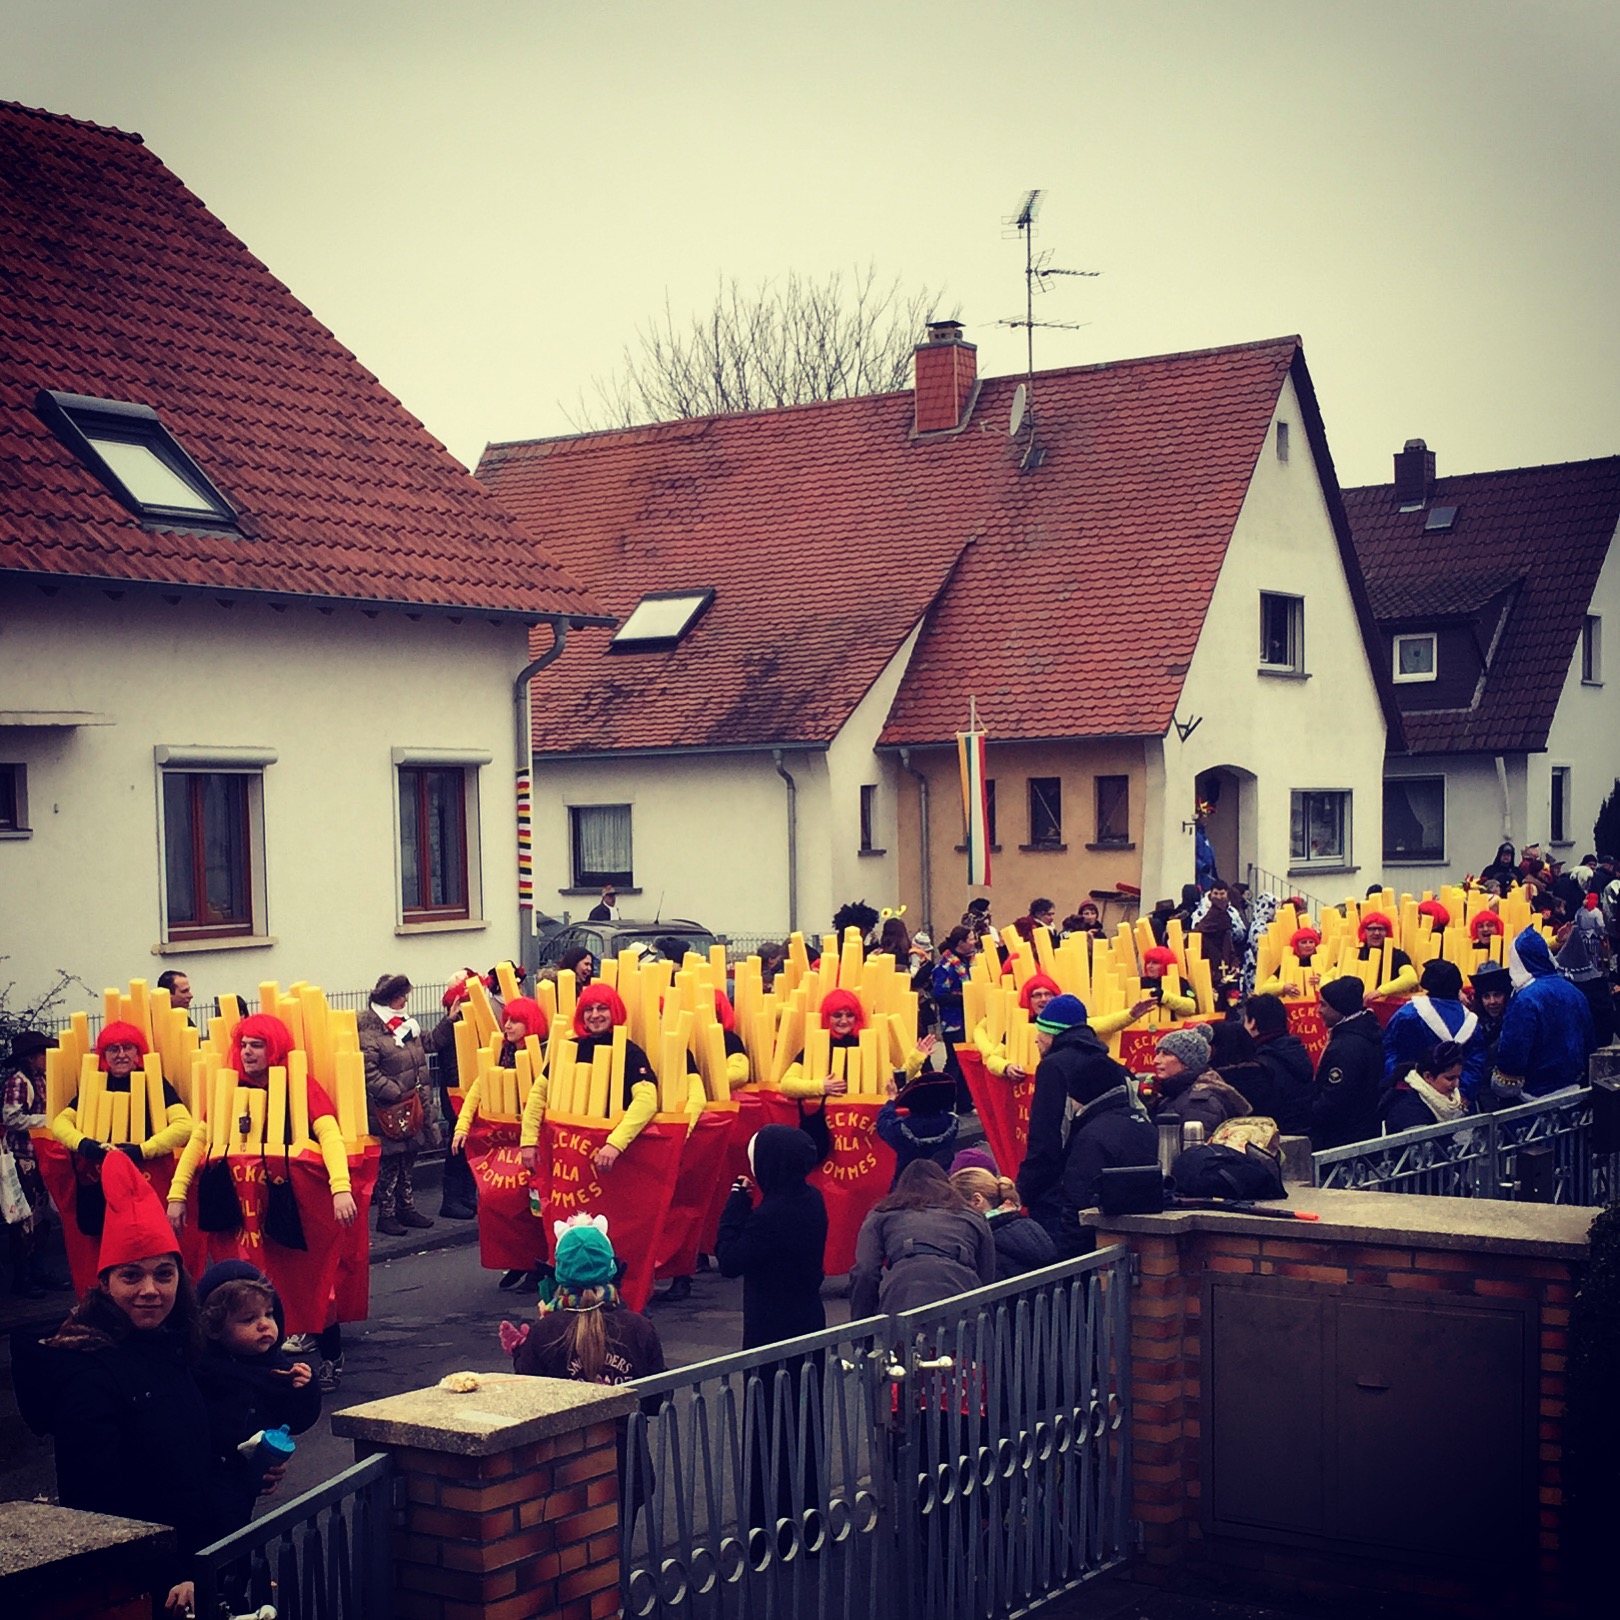 My Favorite Costumes in Dieburg’s Fasching Parade, 2015